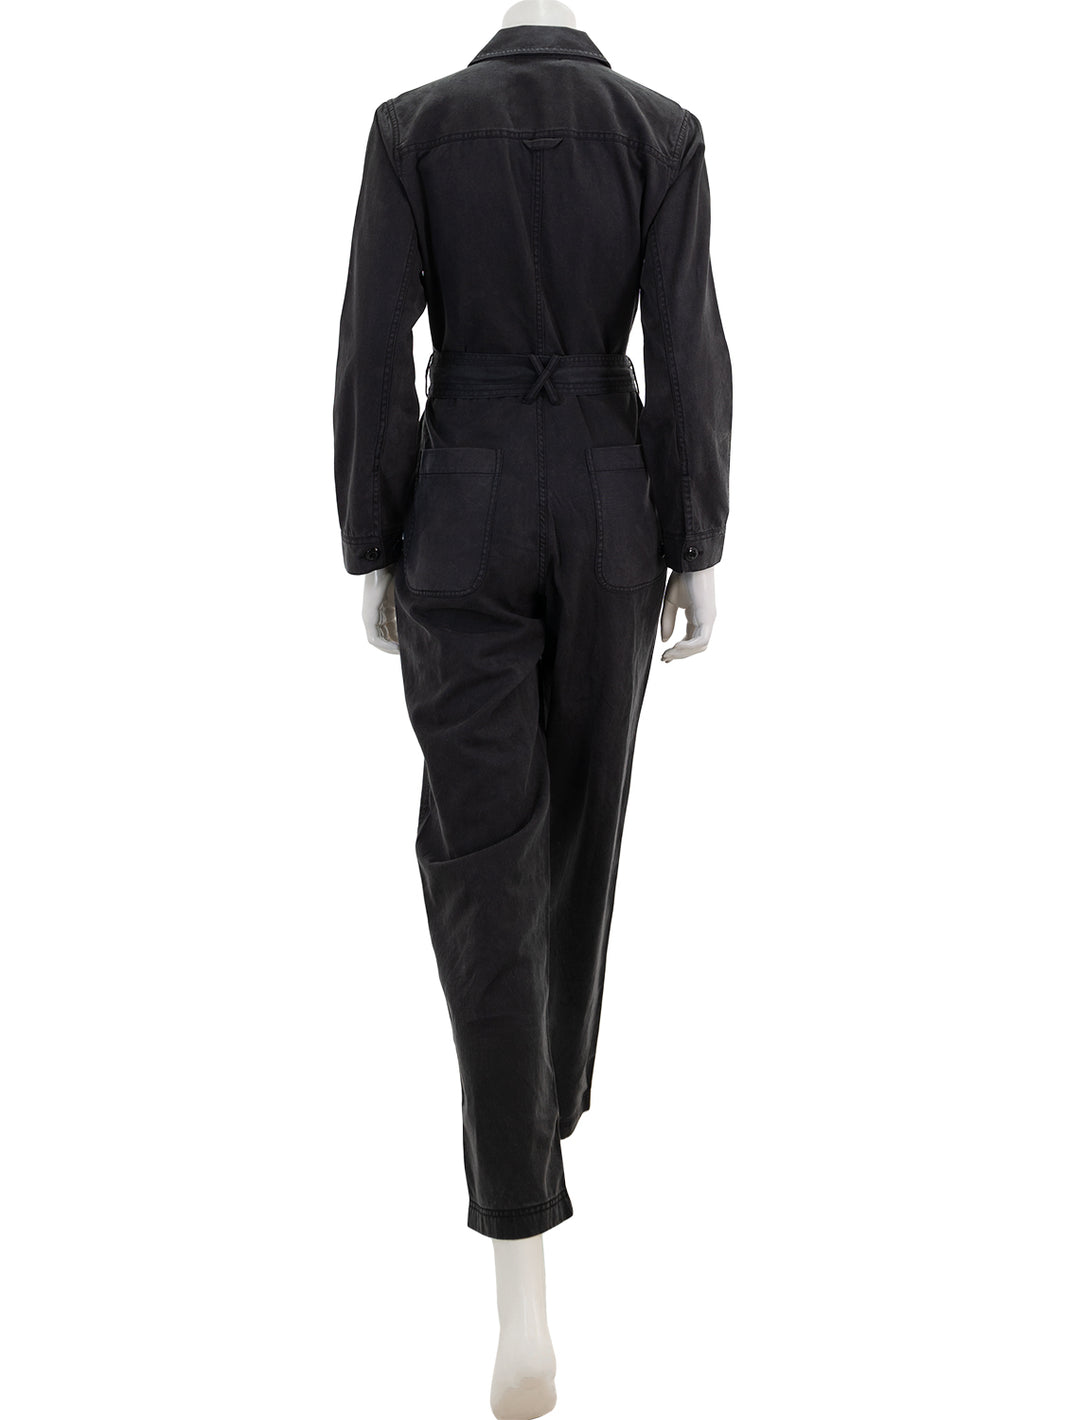 Back view of Alex Mill's standard zip jumpsuit in black.